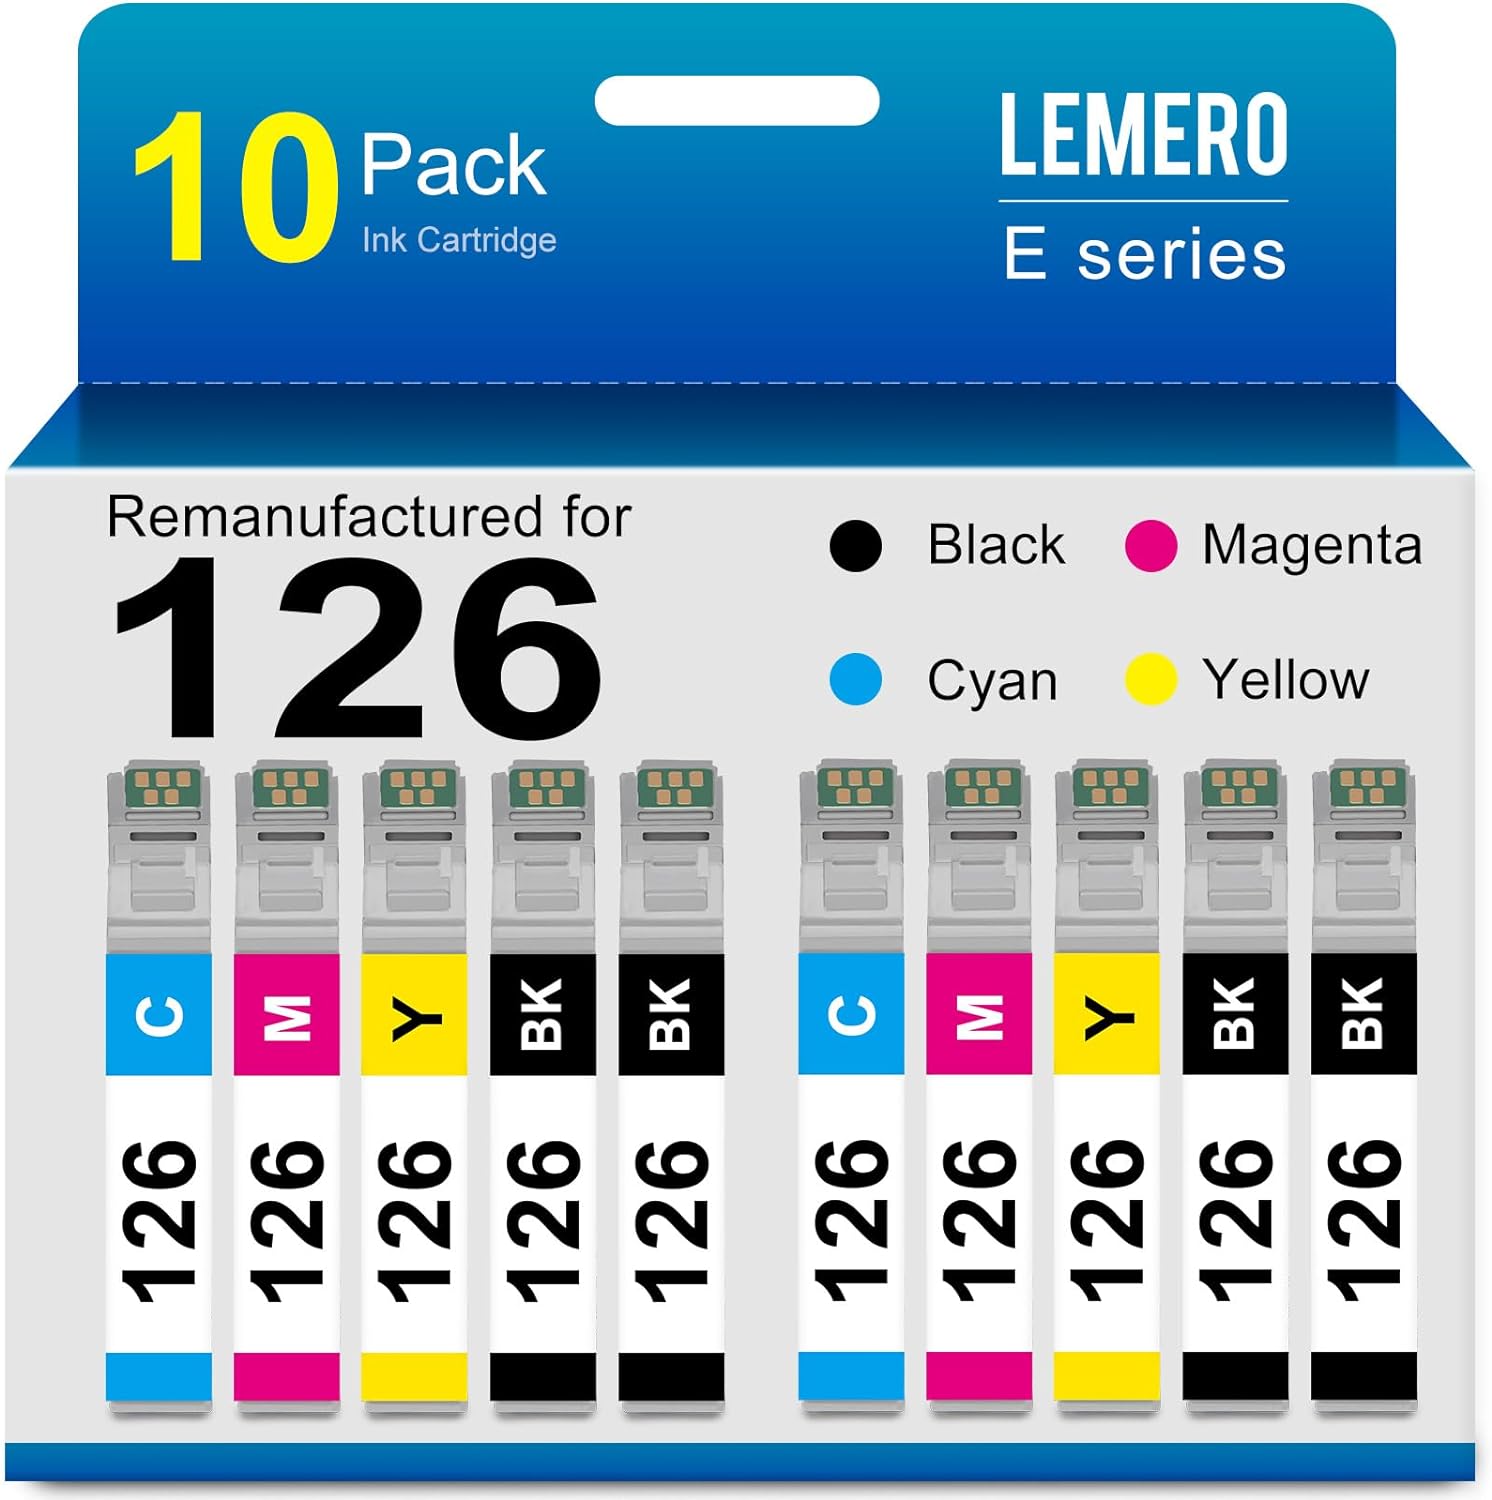 LEMERO Epson 126 Ink Cartridges 10 Pack: 4 Black, 2 Cyan, 2 Magenta, 2 Yellow